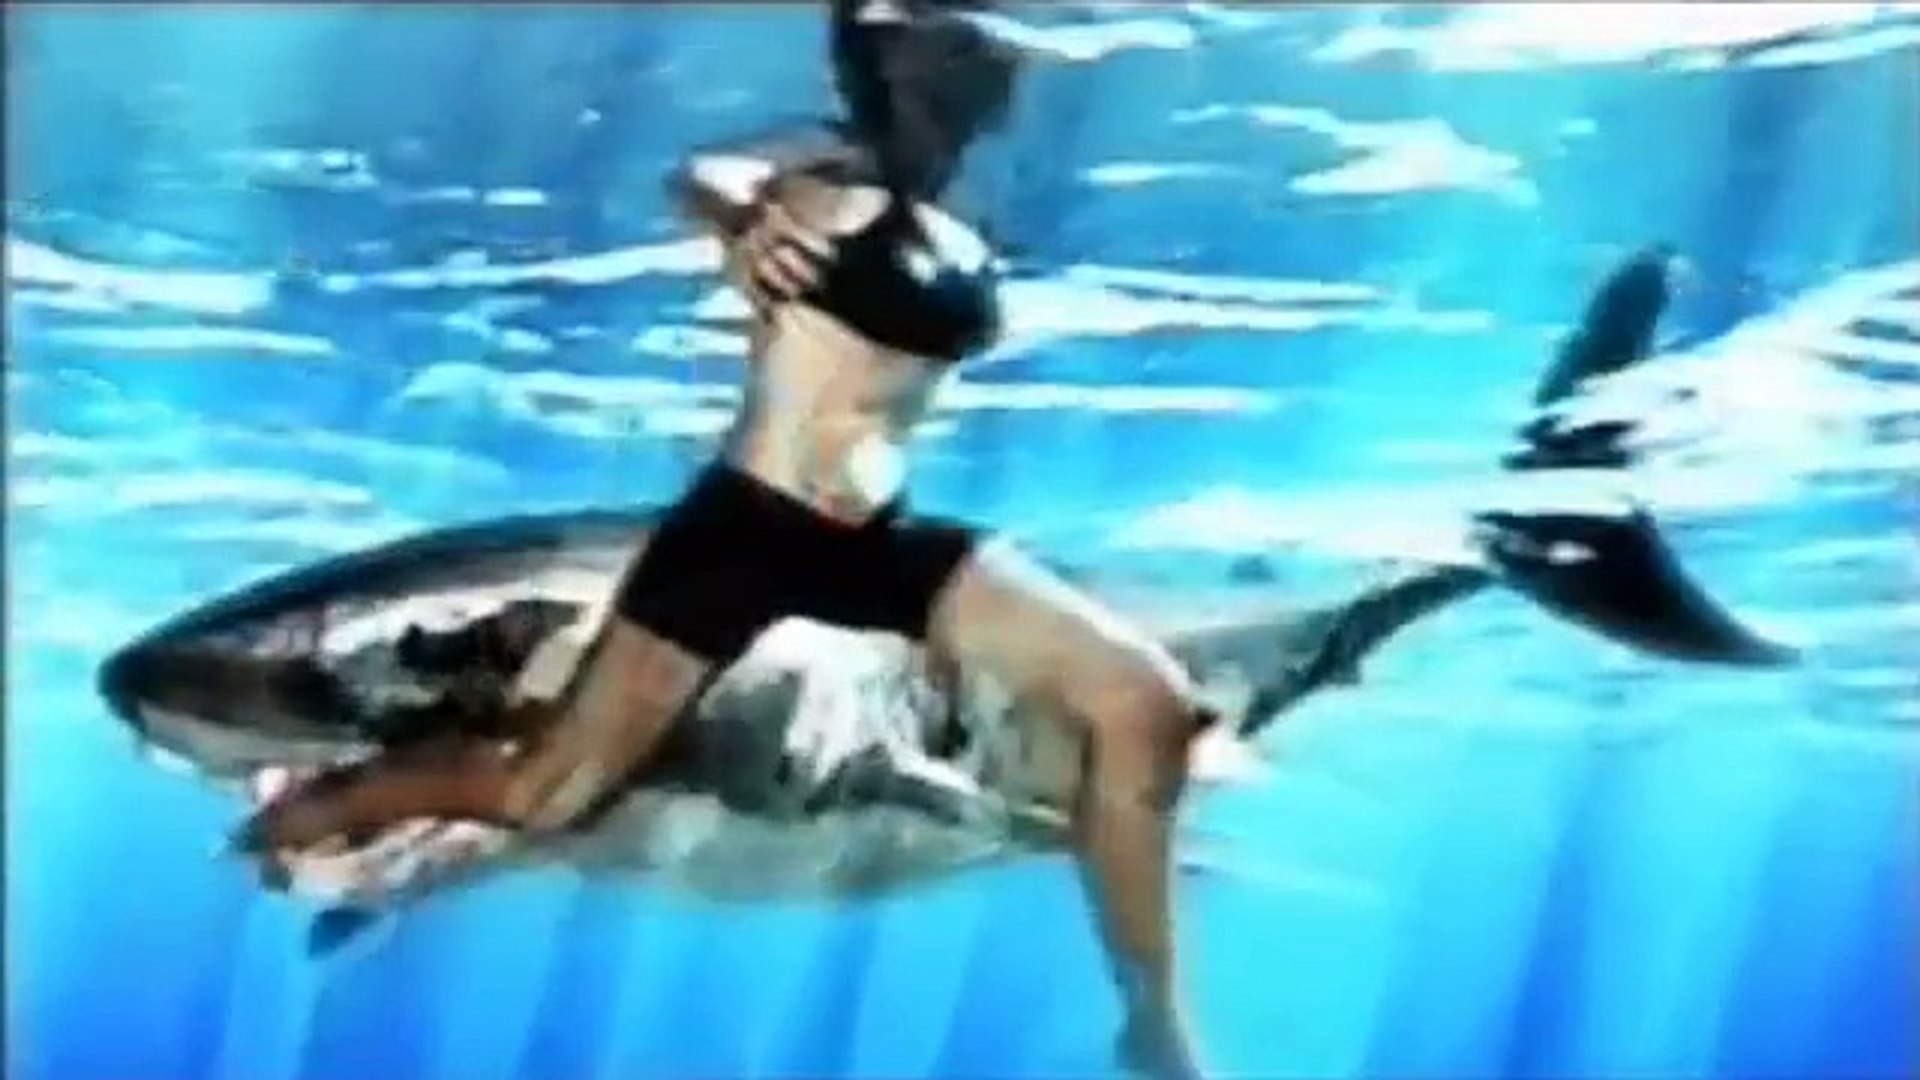 SHARK ATTACK!! WOMEN EATEN ALIVE BY SHARK